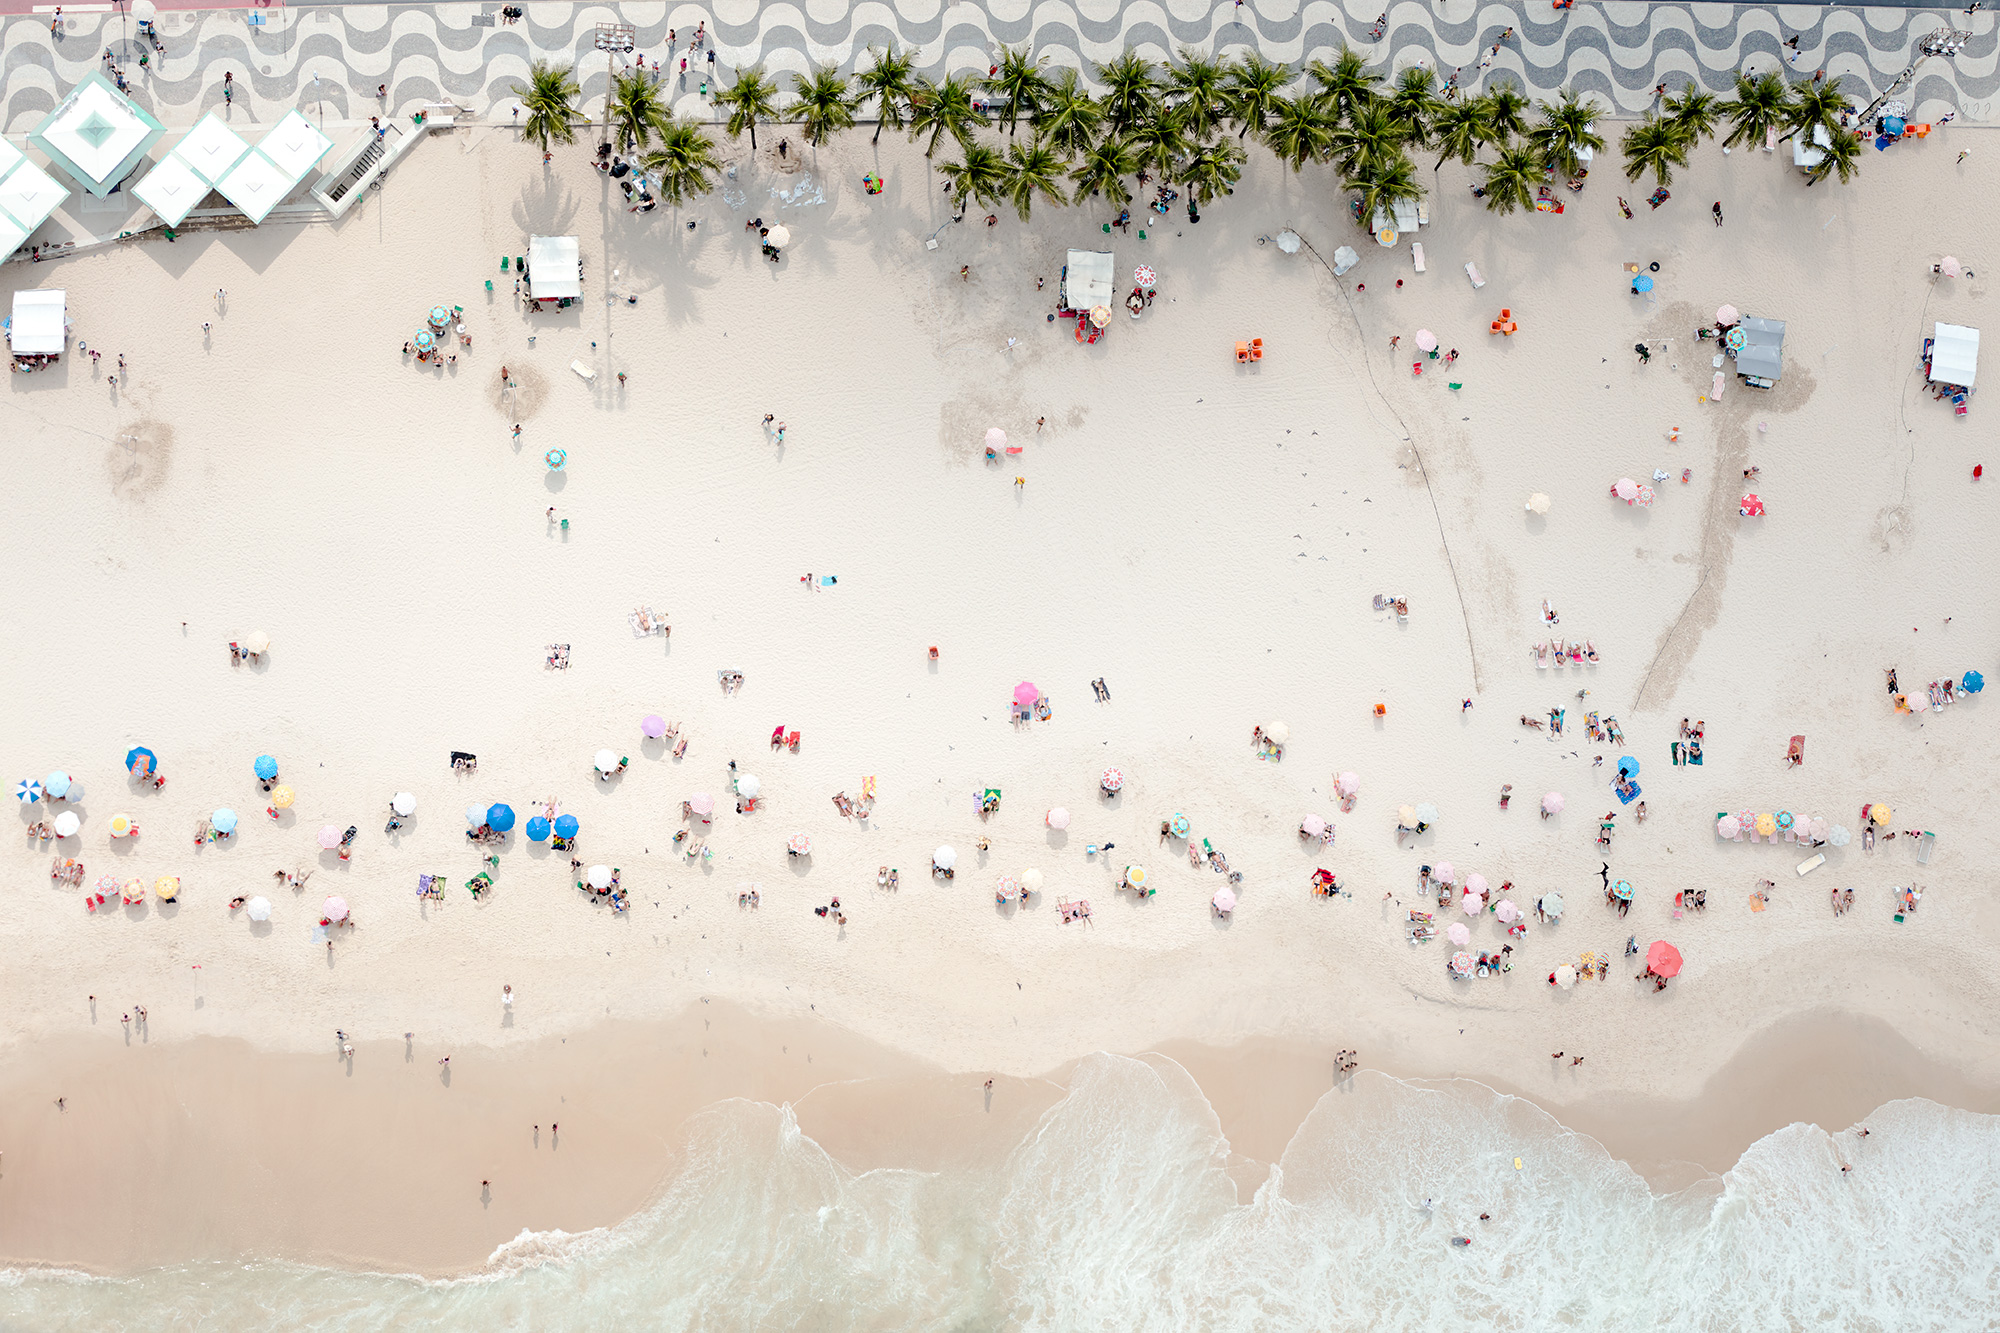 Brazilian beaches, a hive of activity